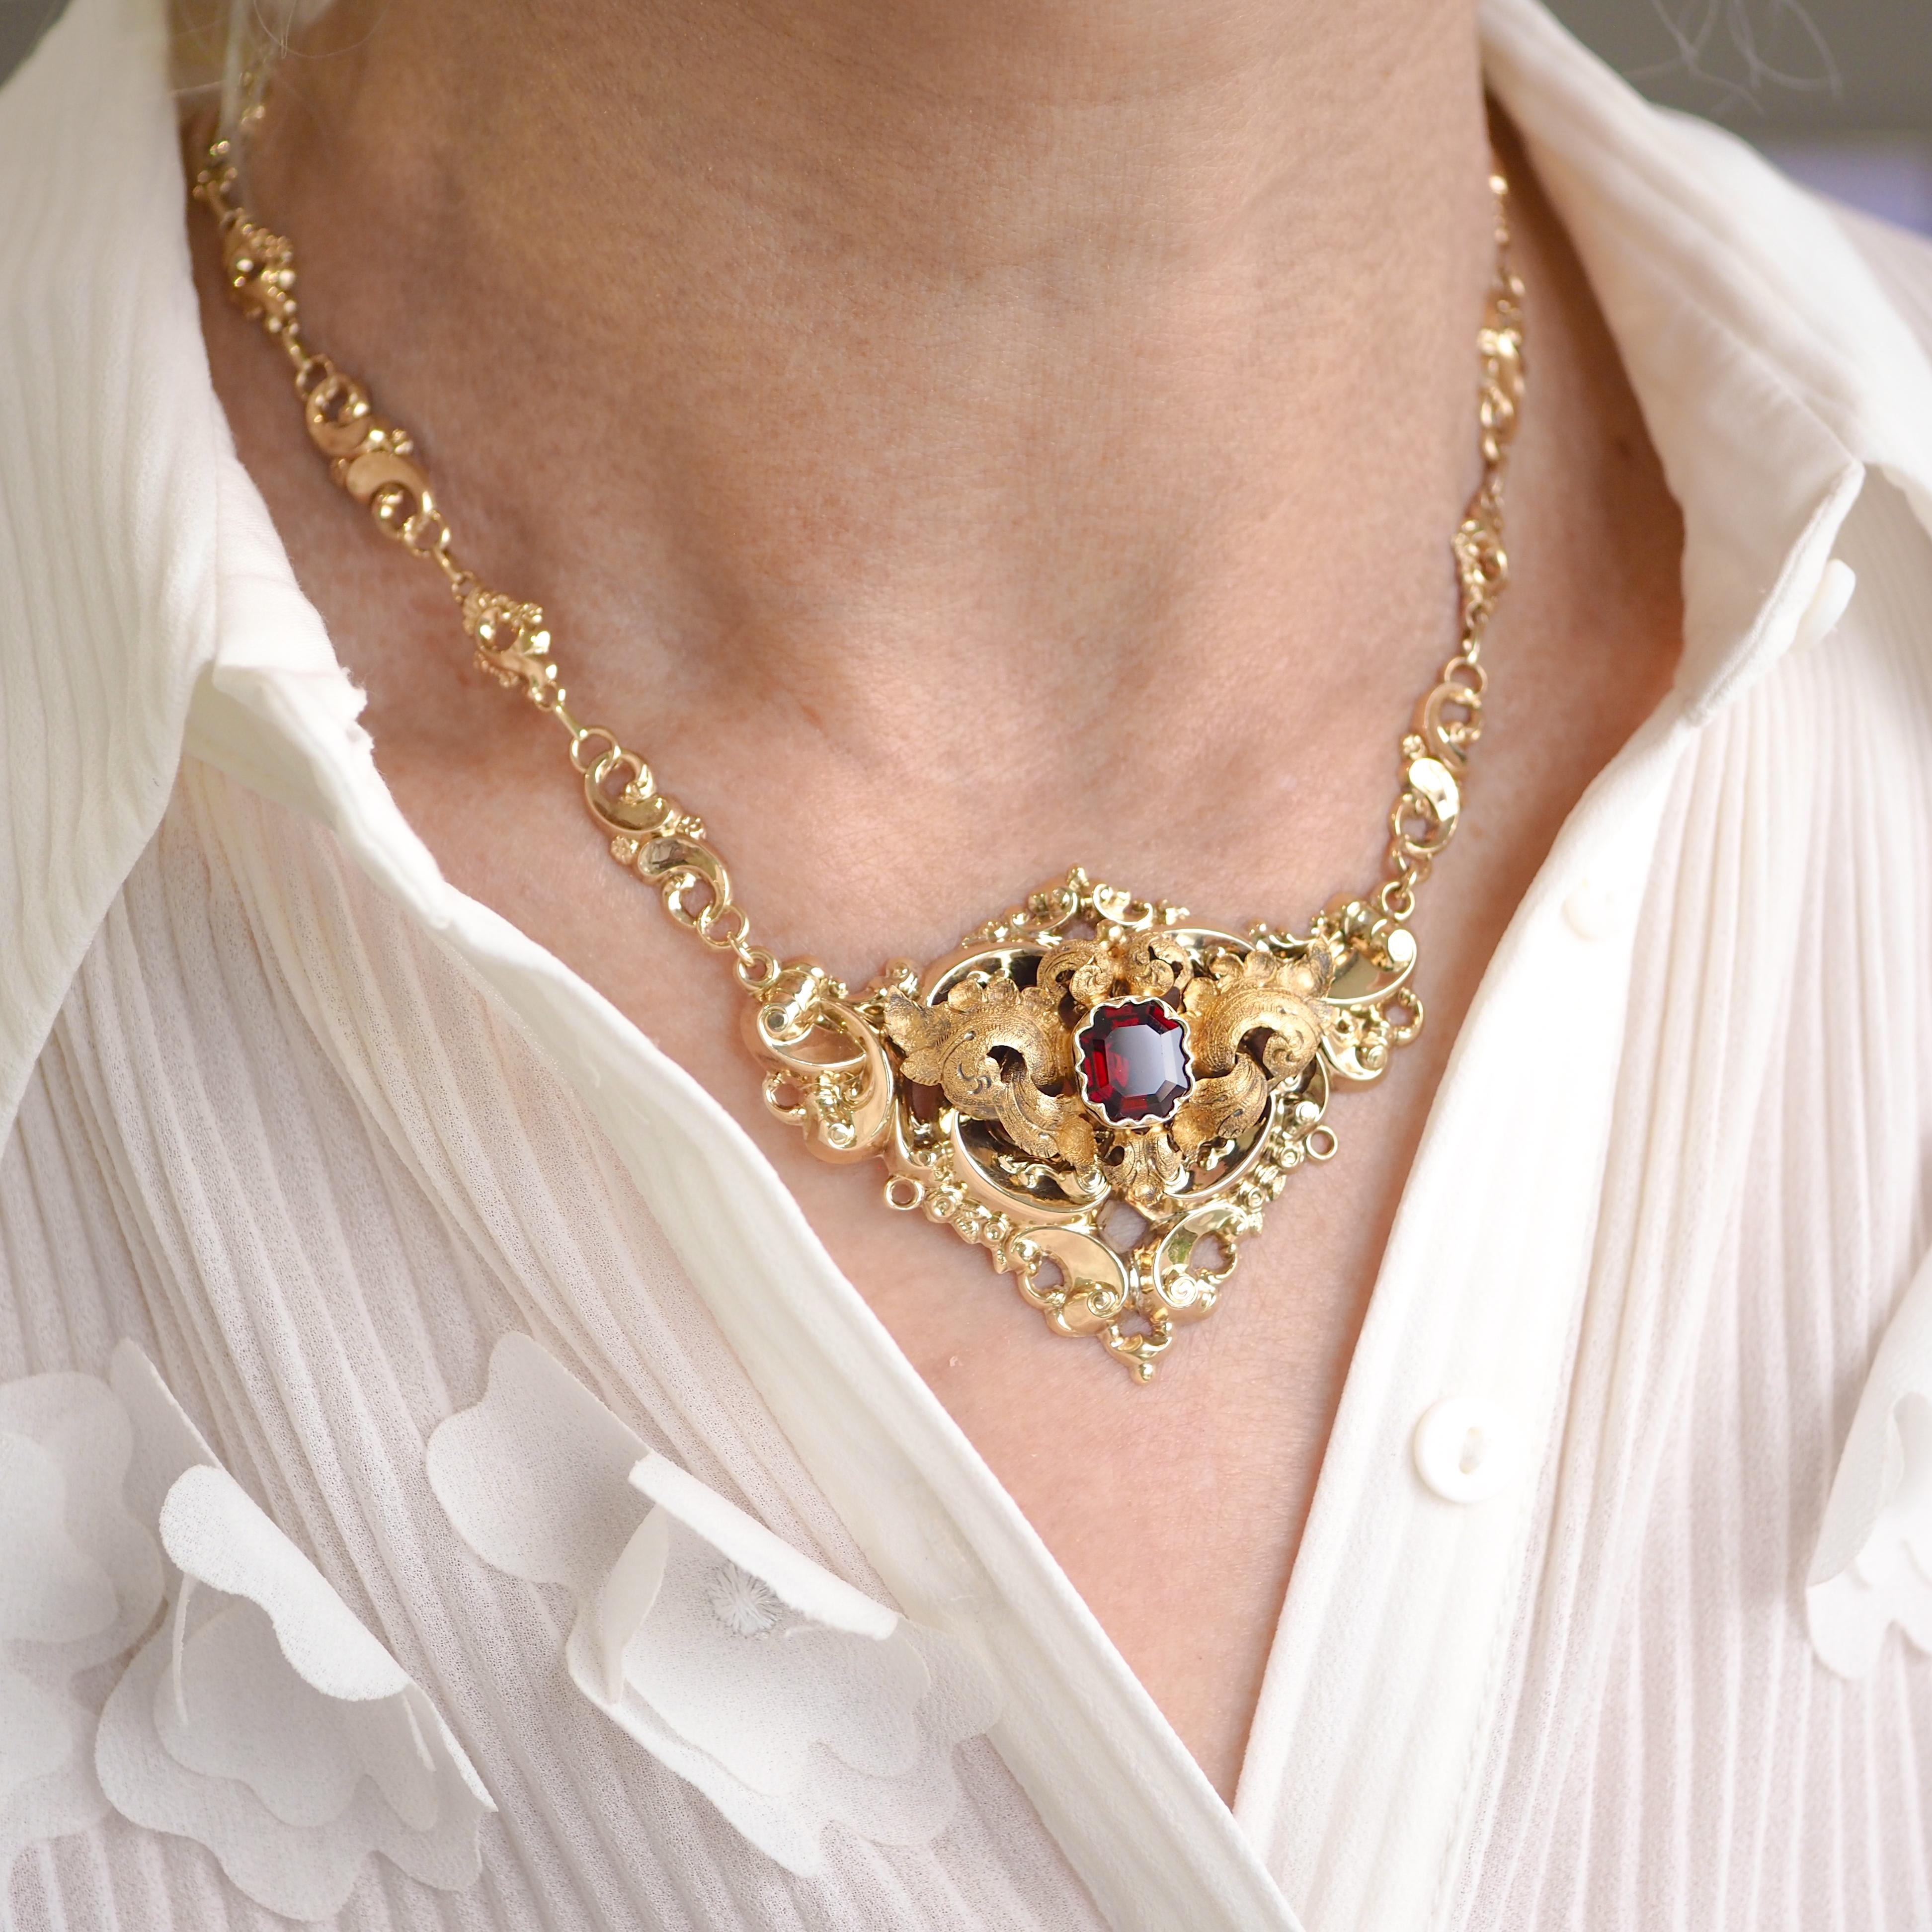 Antique Victorian 18K Gold Garnet Necklace in Baroque Revival Style, c.1840 1